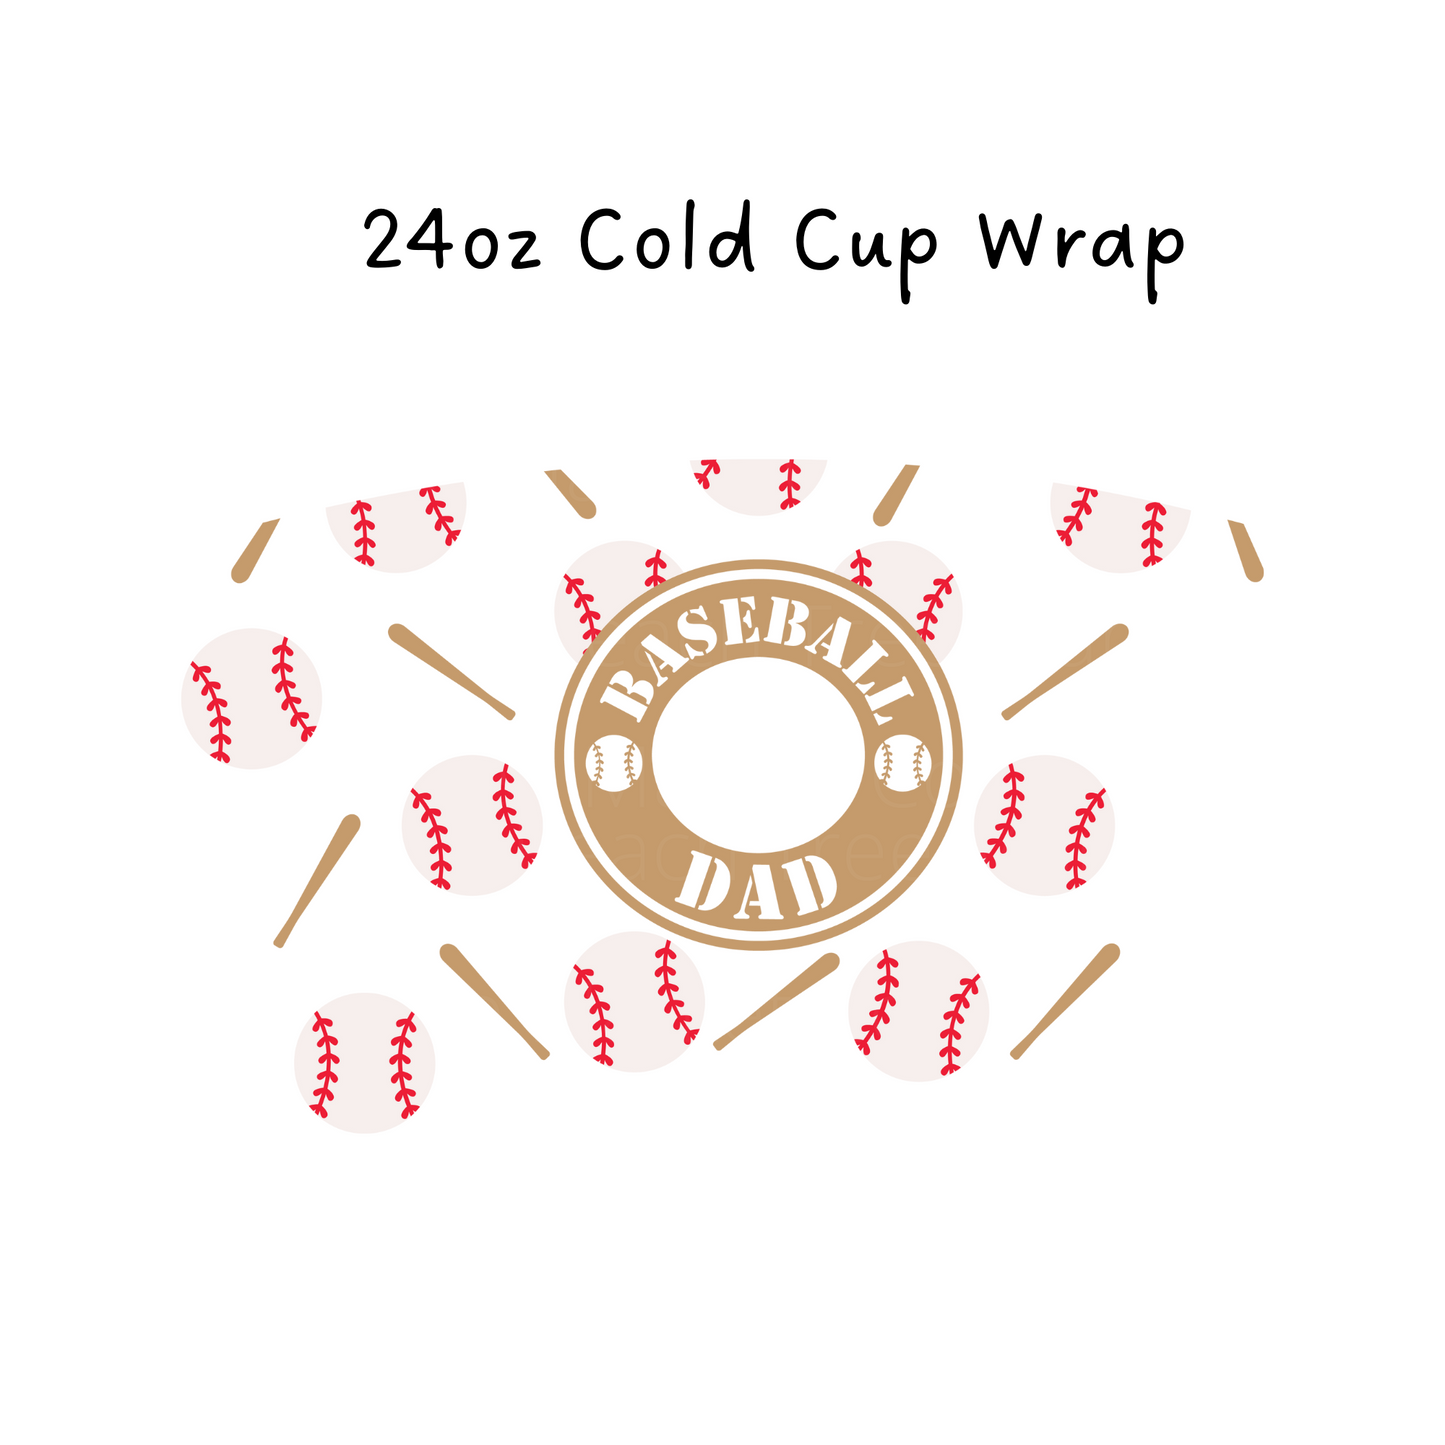 Baseball Dad 24 OZ Cold Cup Wrap